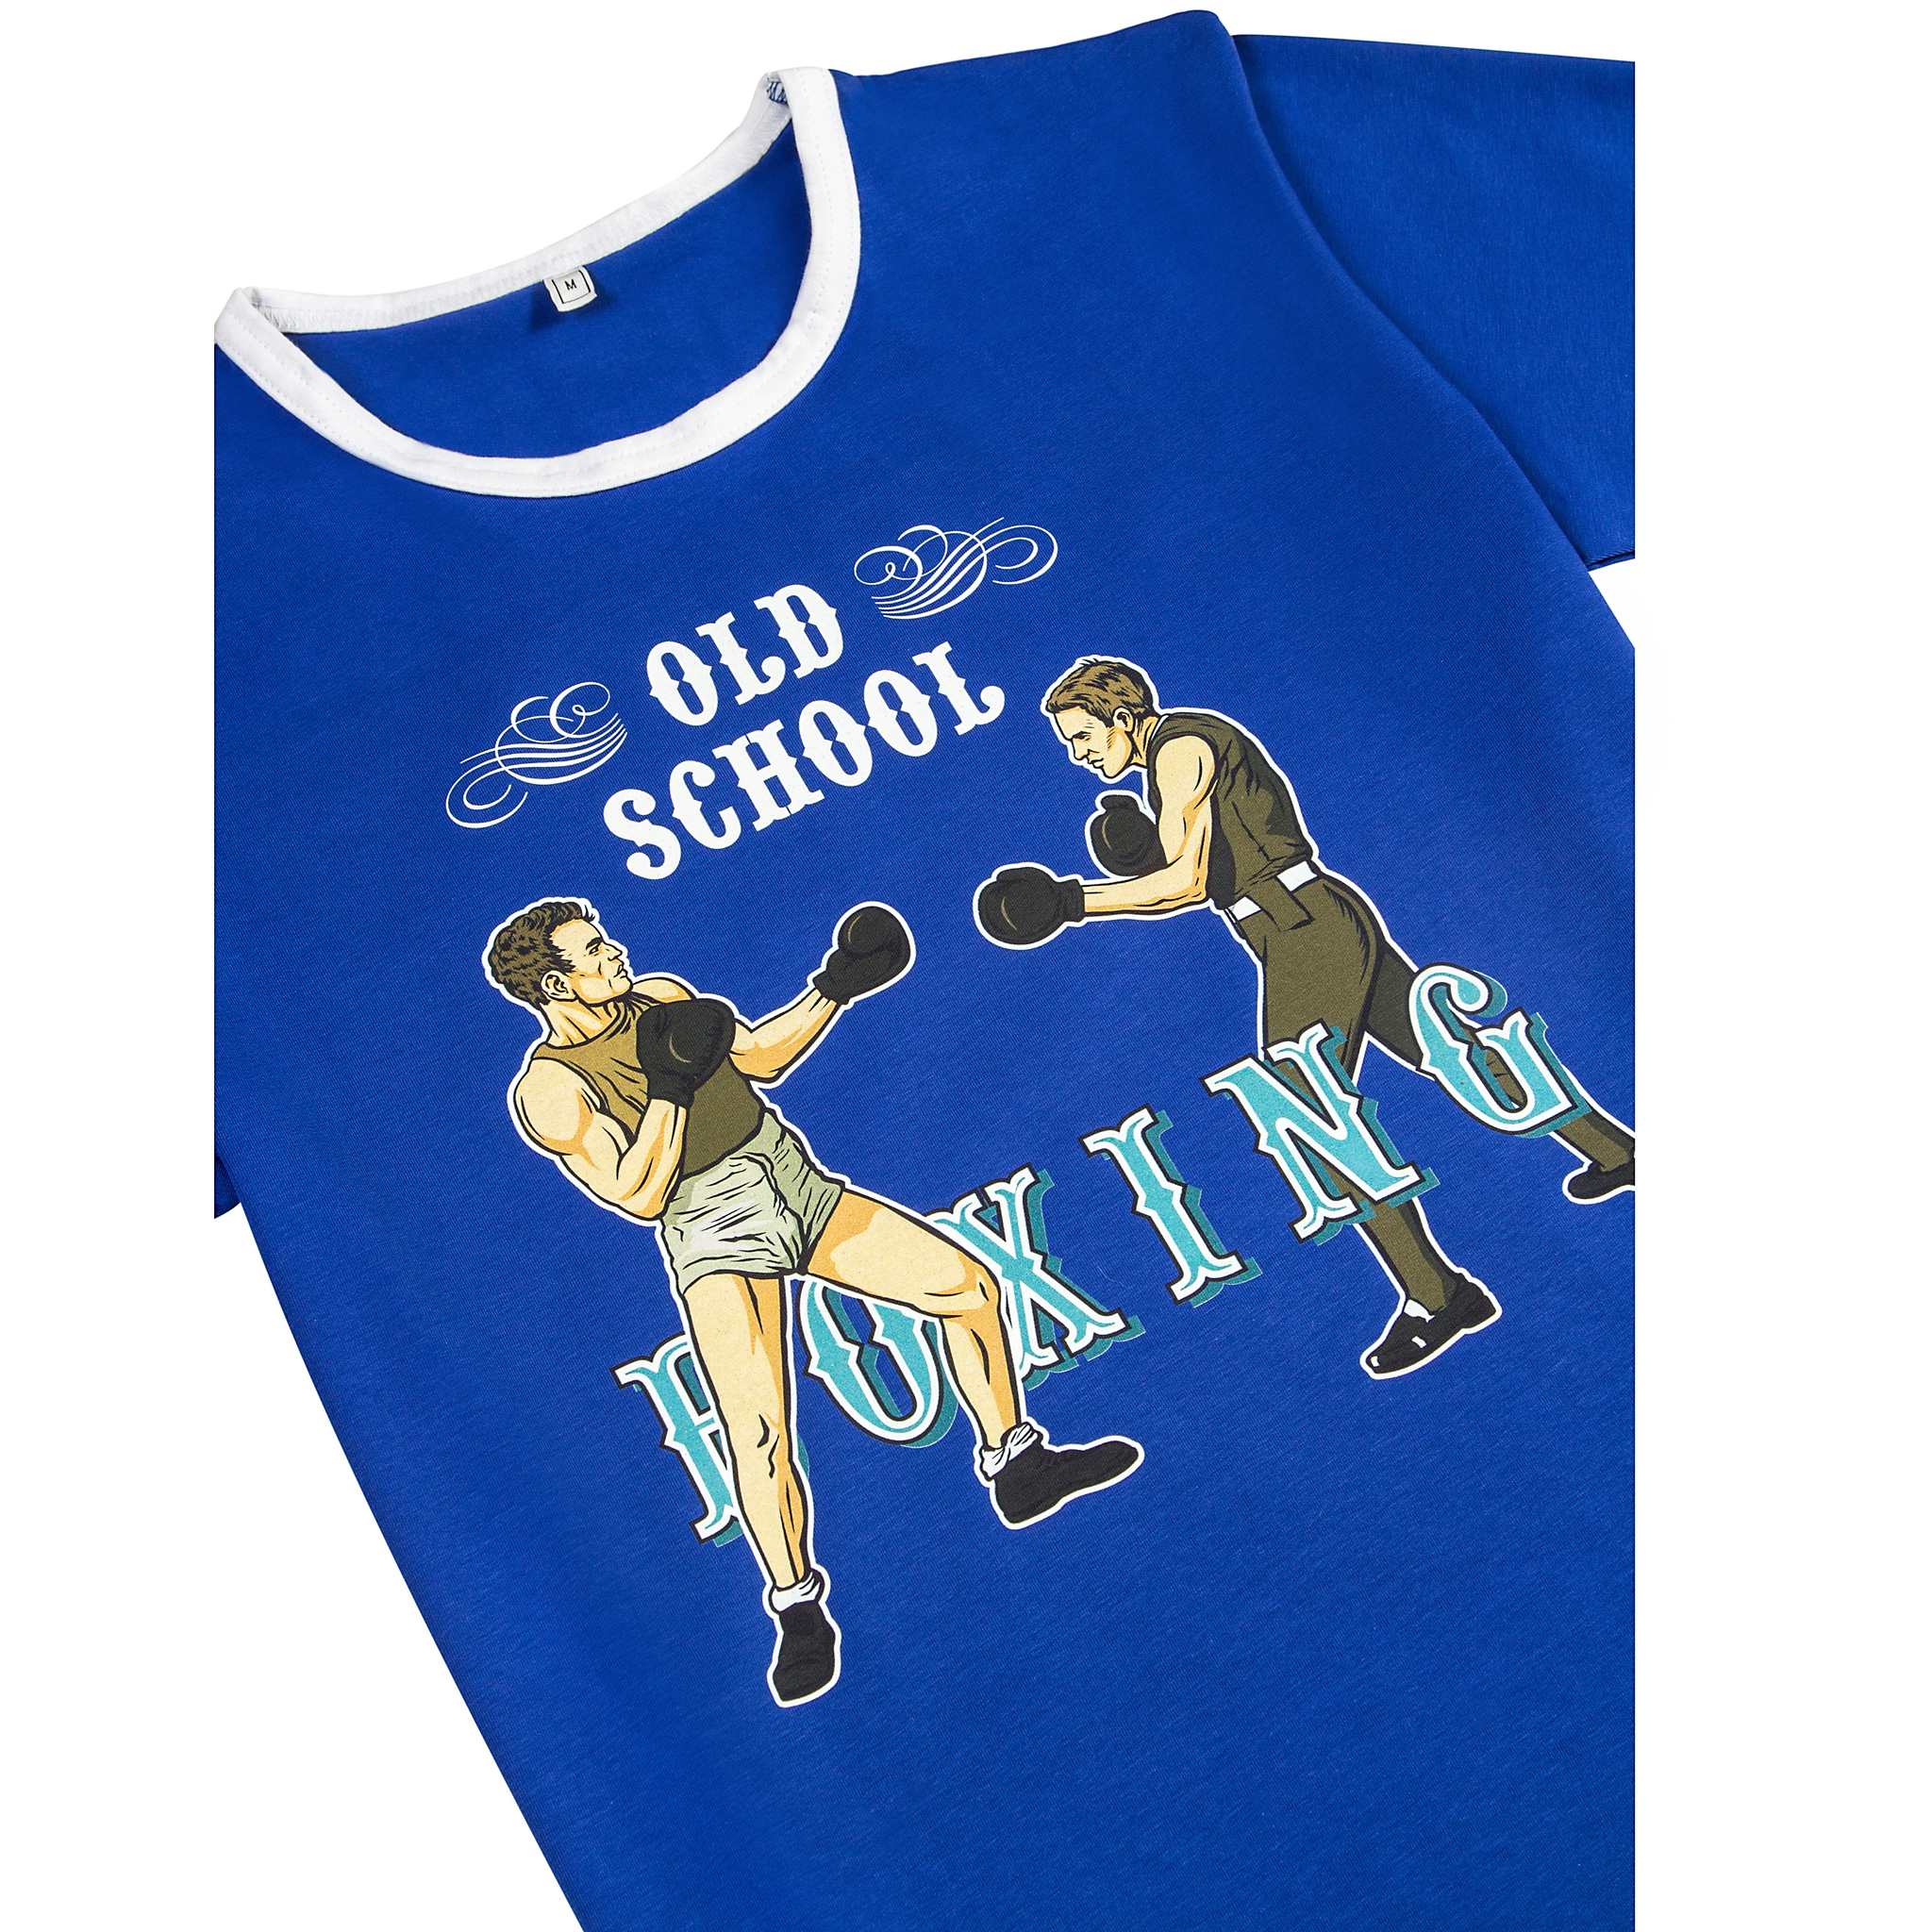 Old school boxing blue t-shirt